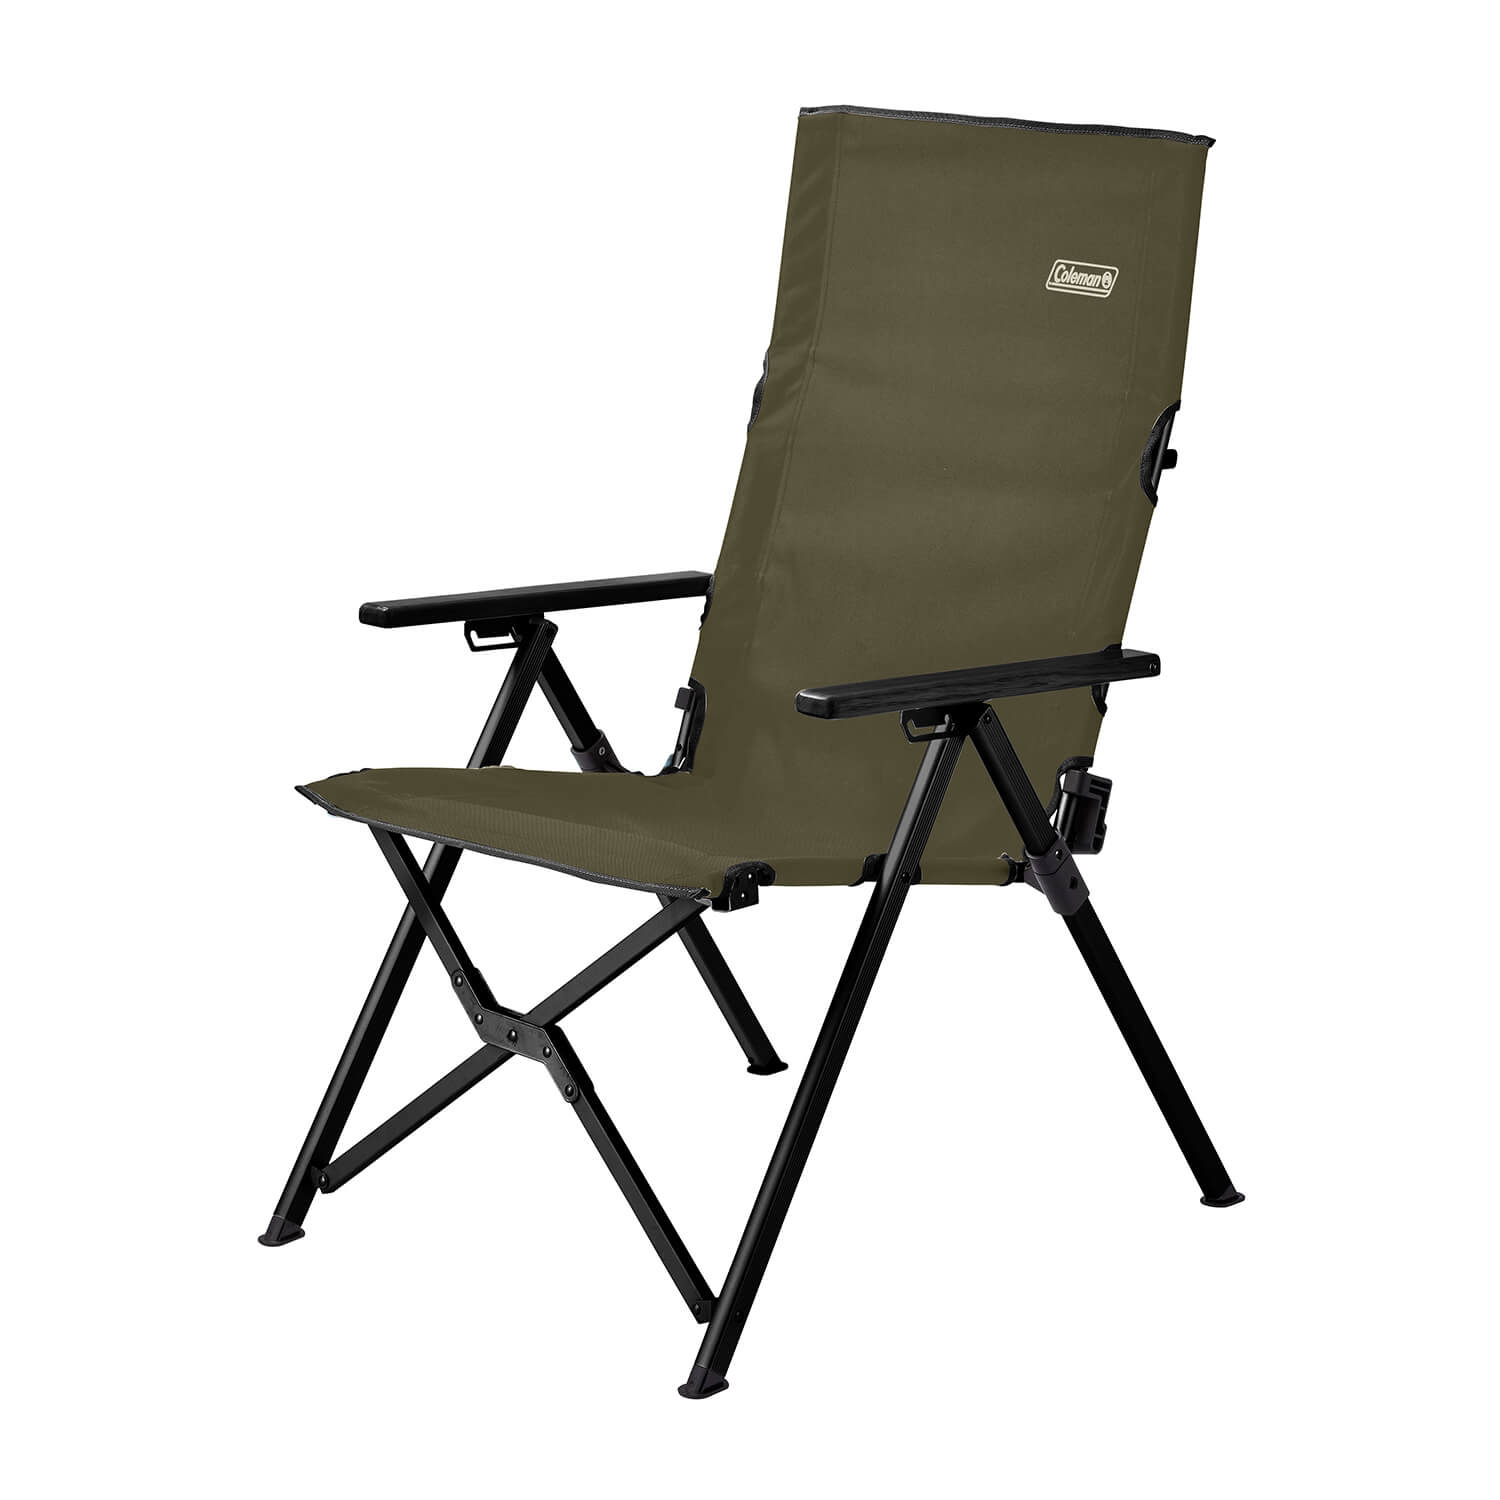 Newell Brands Japan G.K. Coleman Coleman 折疊式躺椅 3段式椅背調整